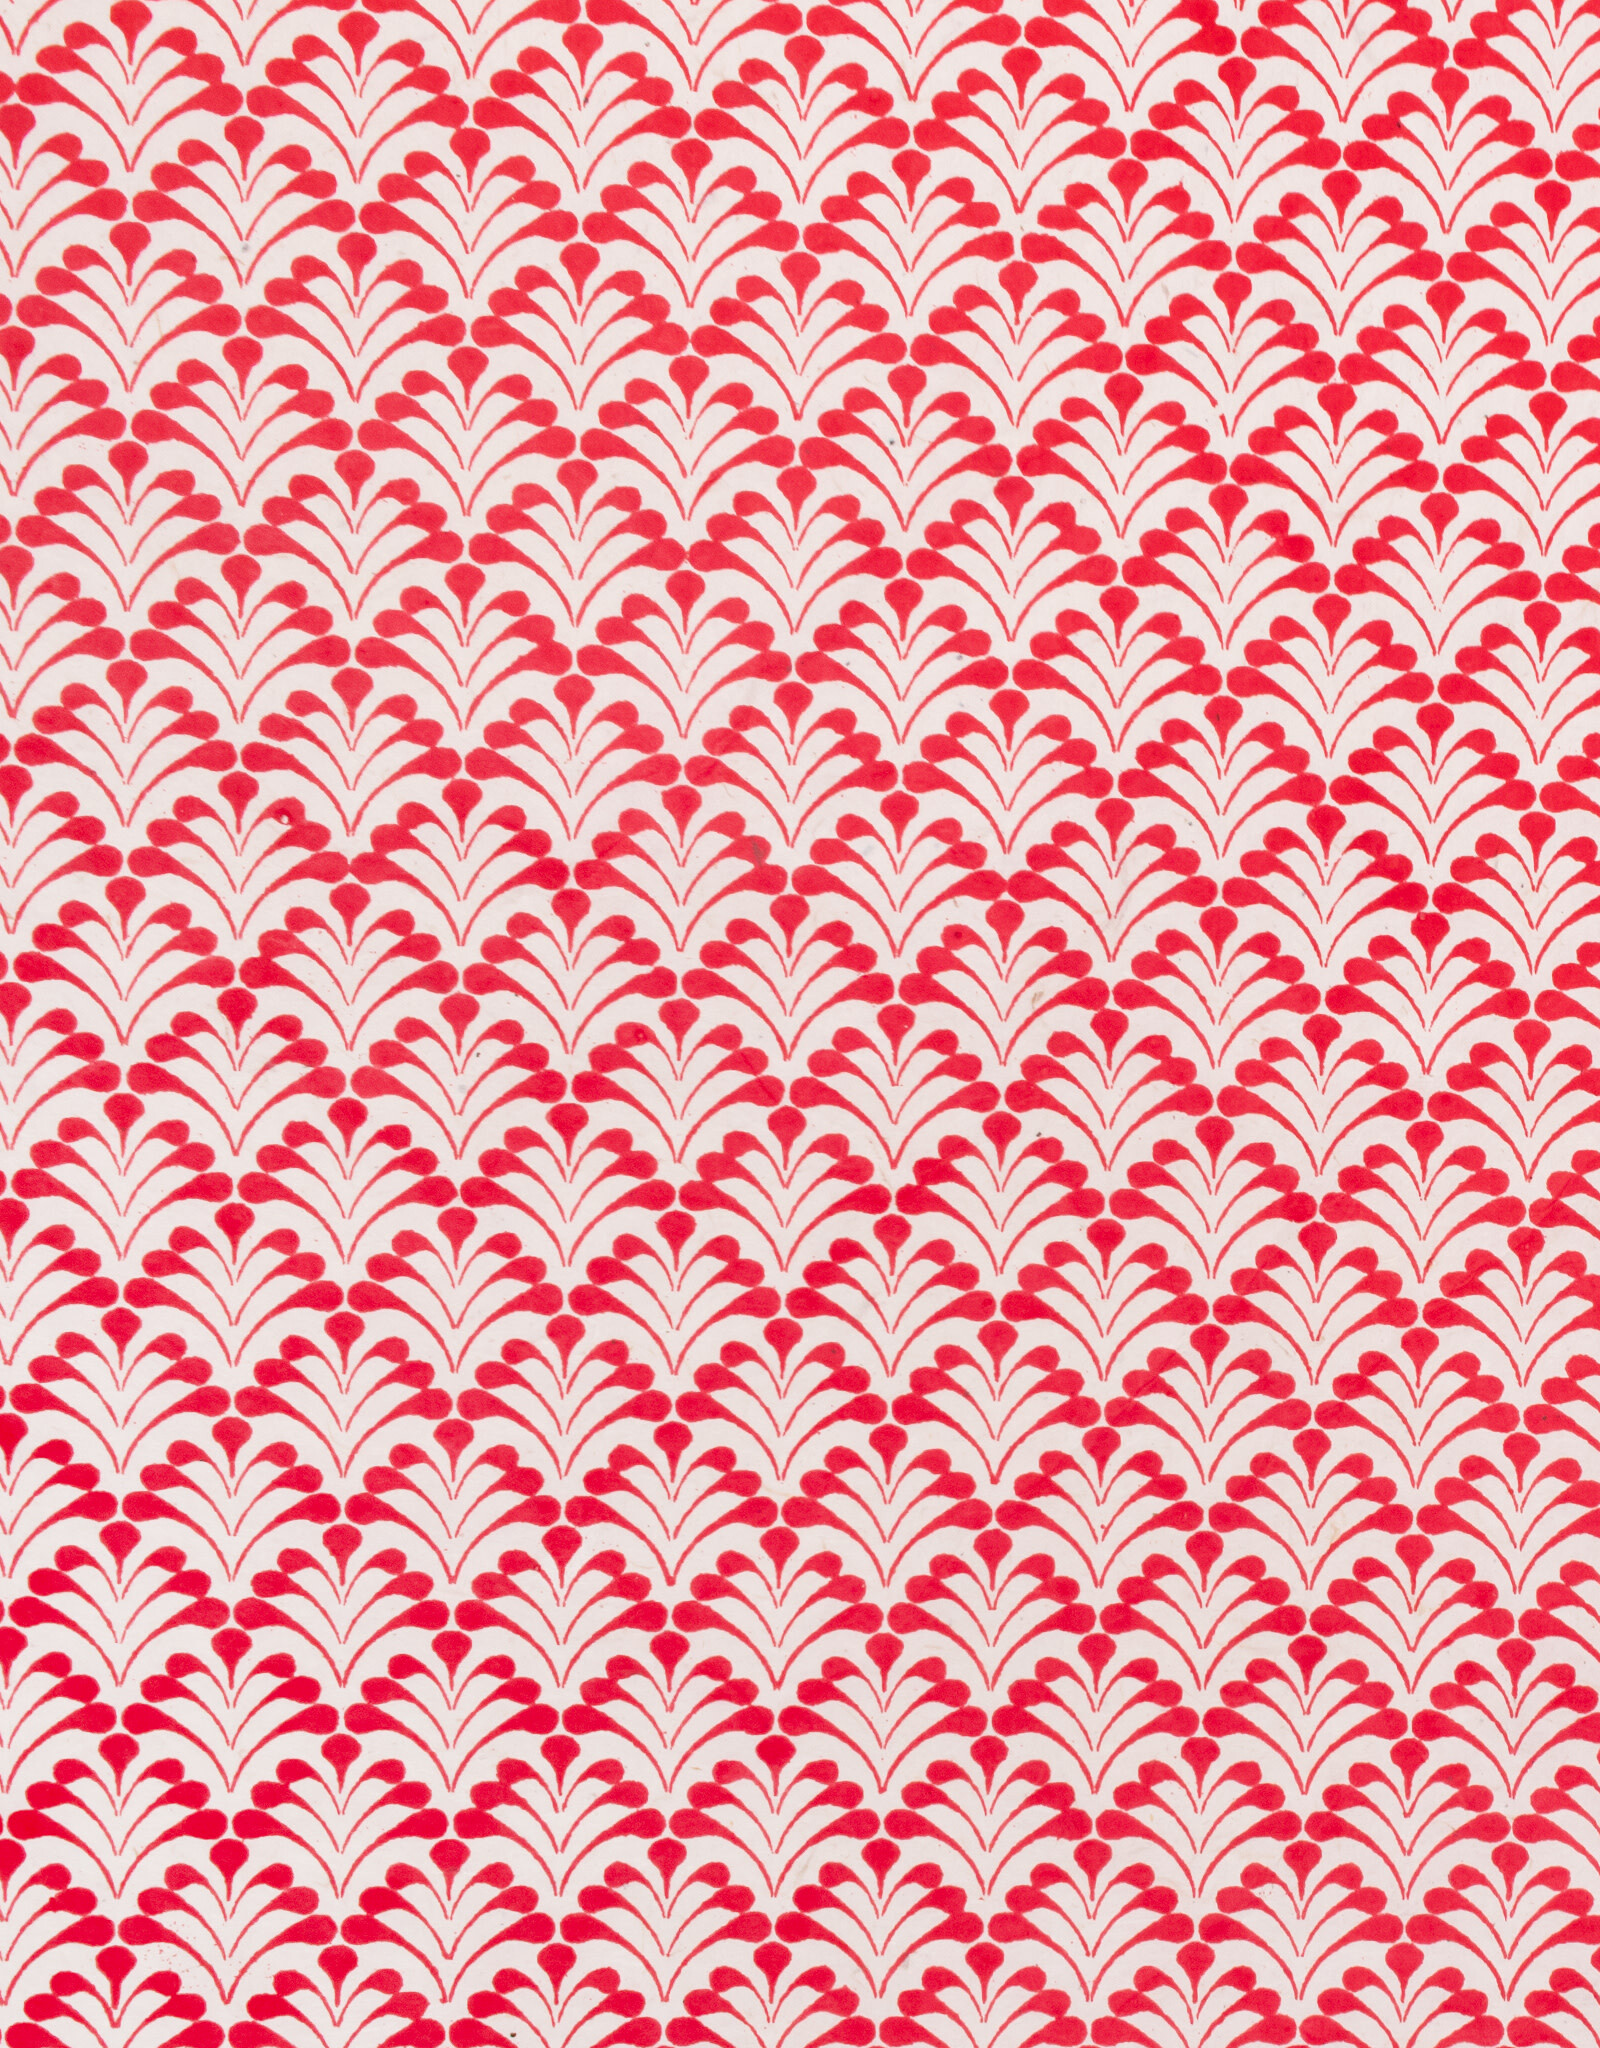 AITOH Aitoh Lokta Peacock, Red on Natural, 19.5" x 29.5"